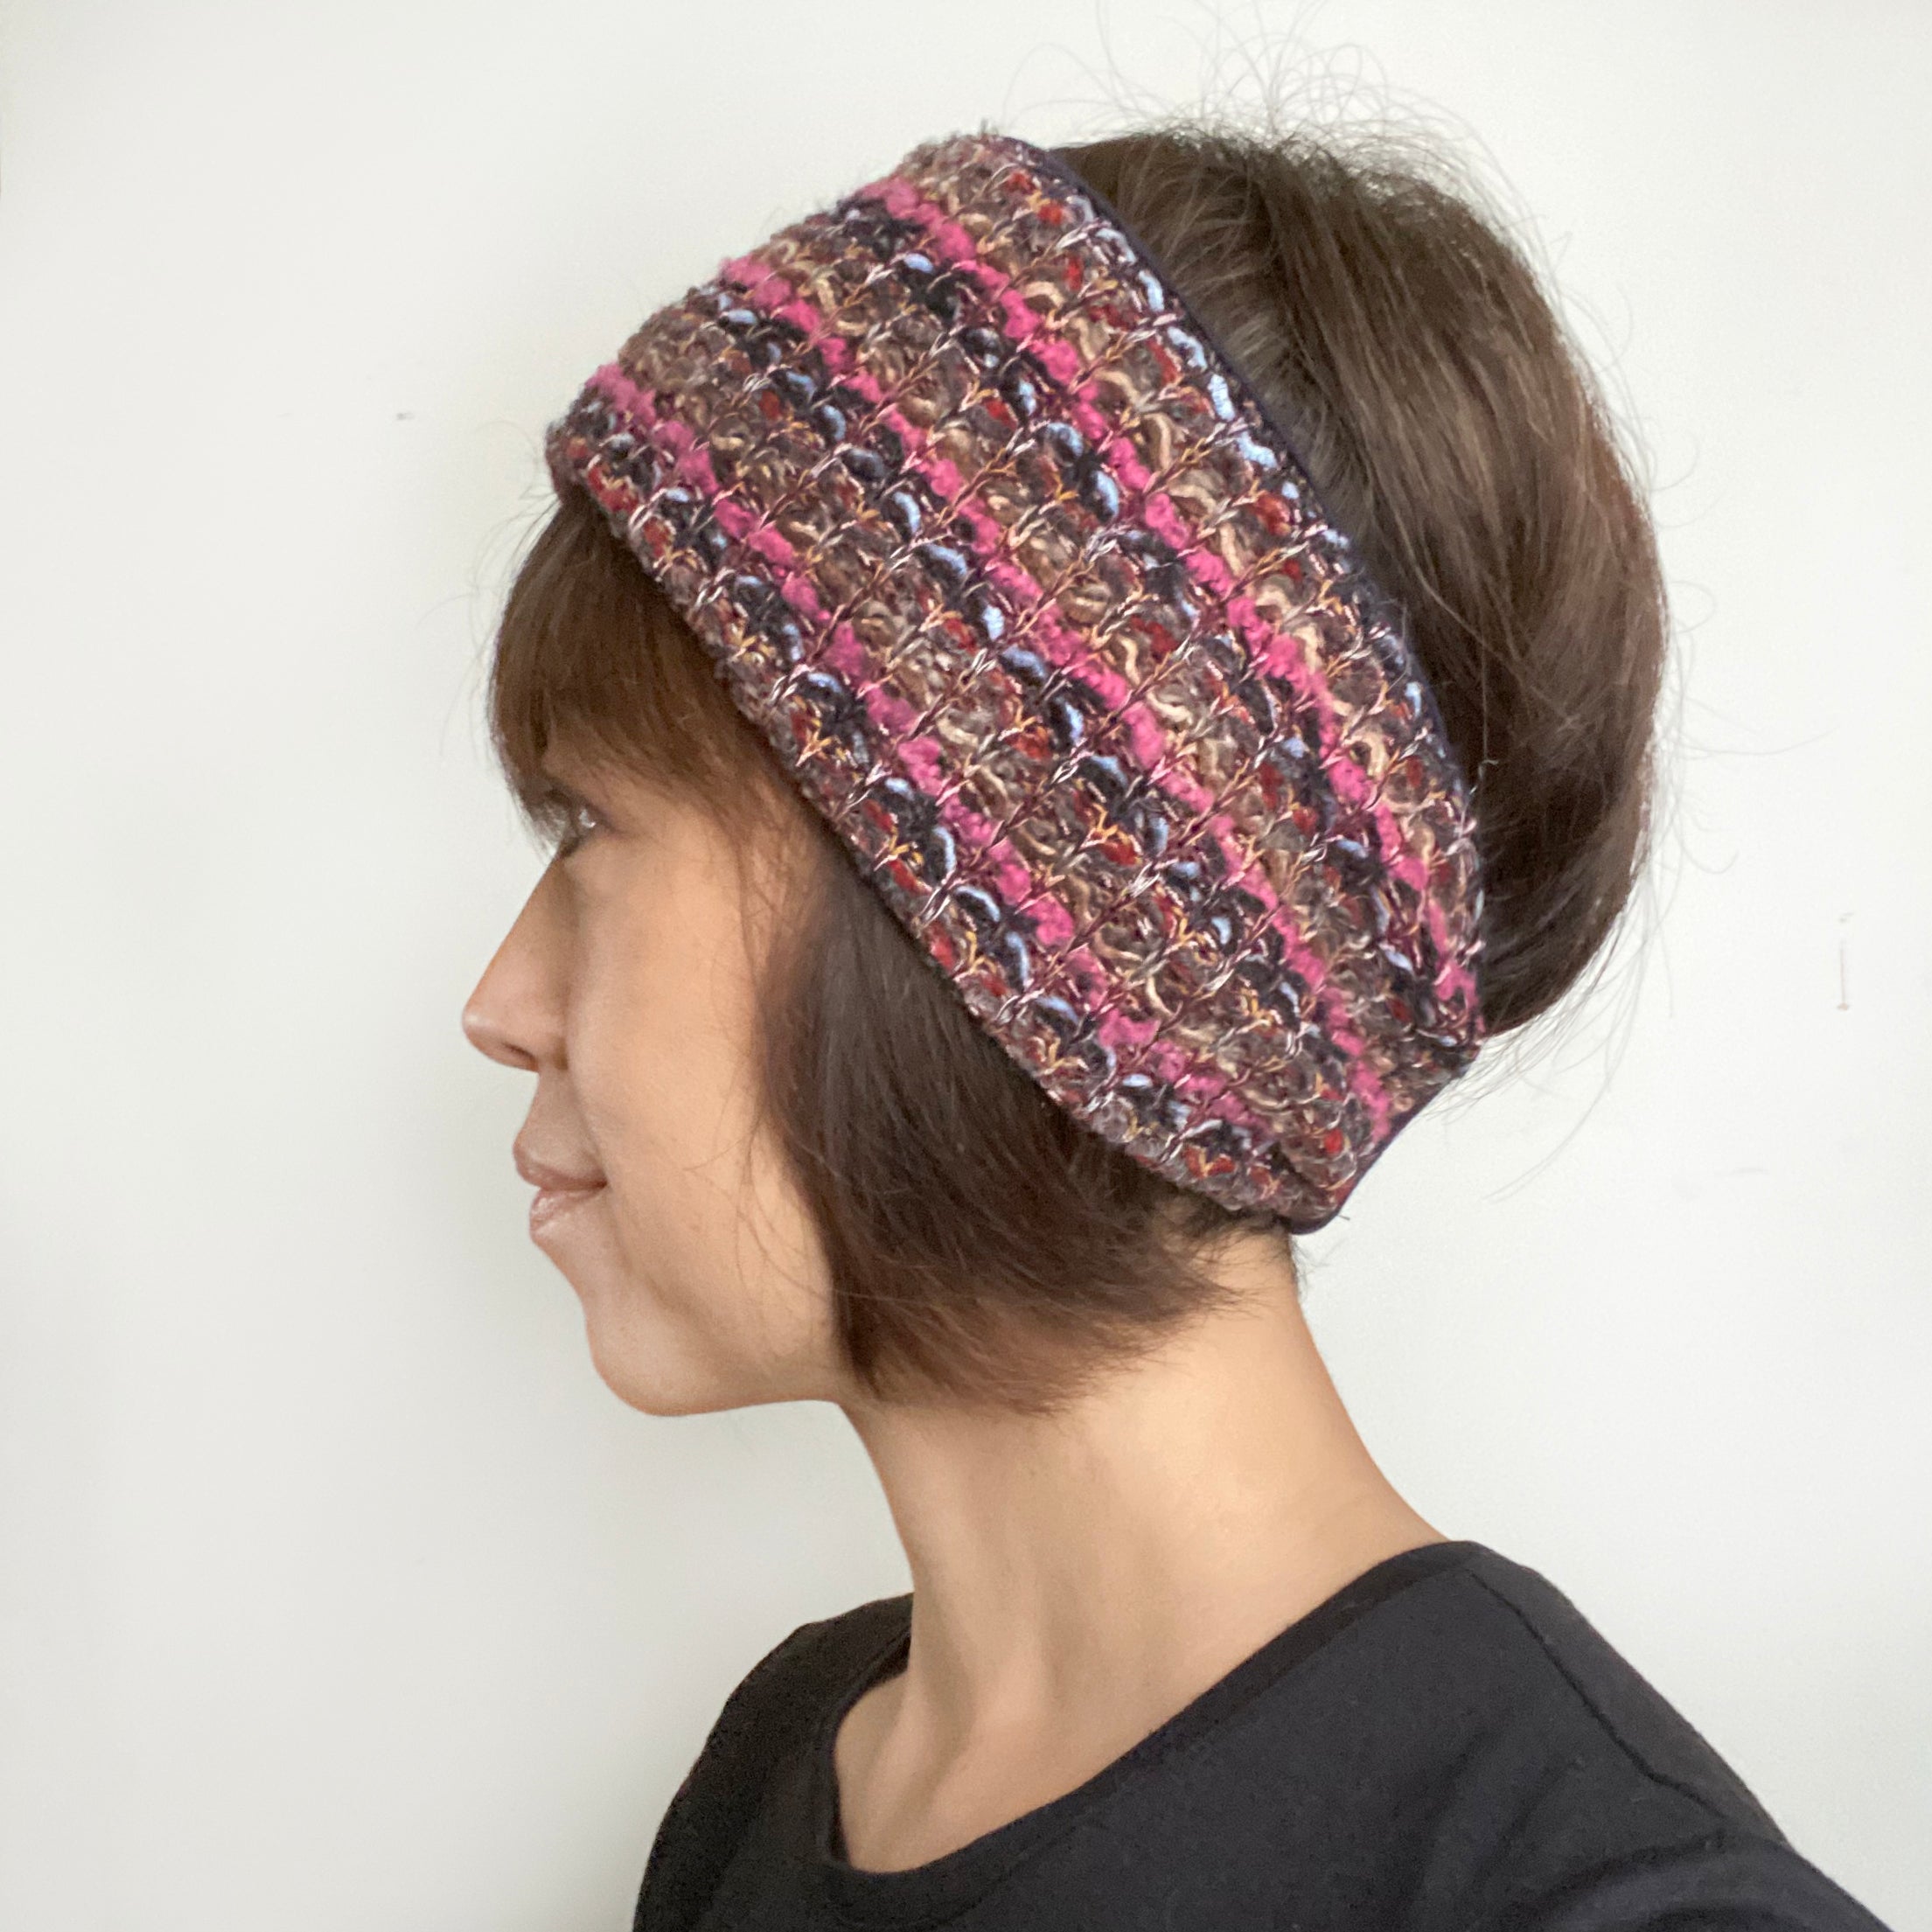 Wool Headband Ear warmer Pink Navy striped